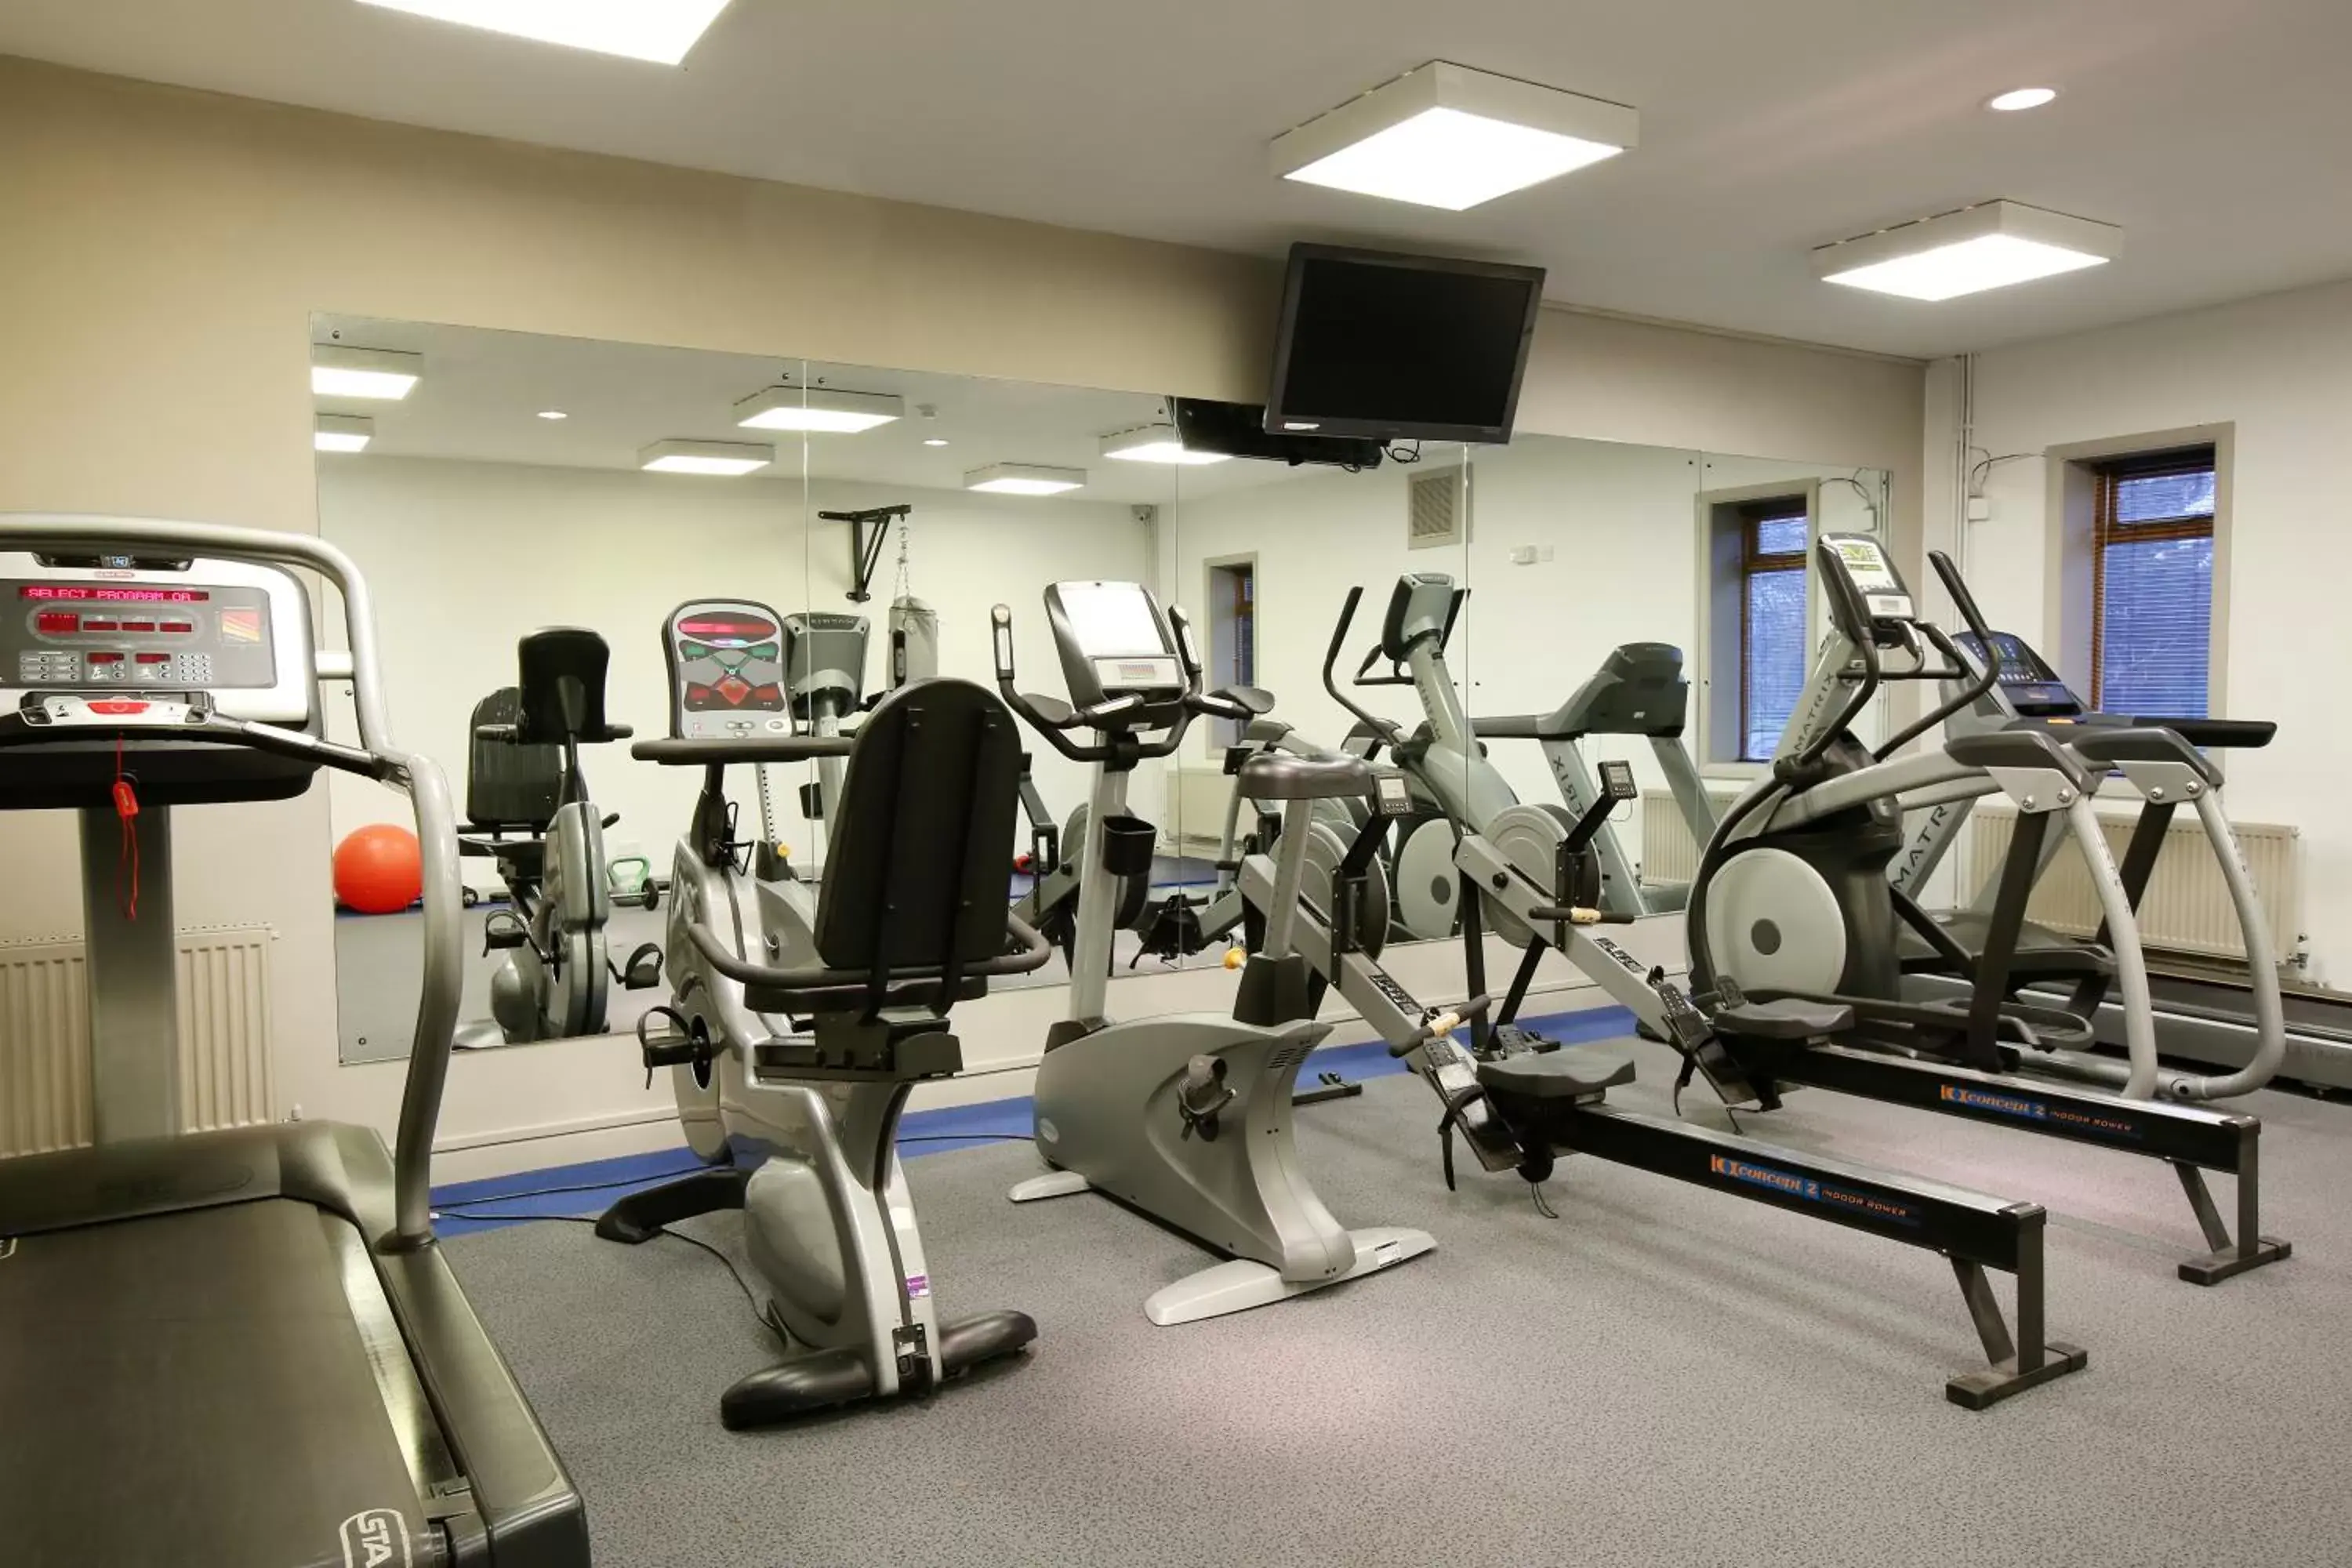 Fitness centre/facilities in Hartsfield Manor